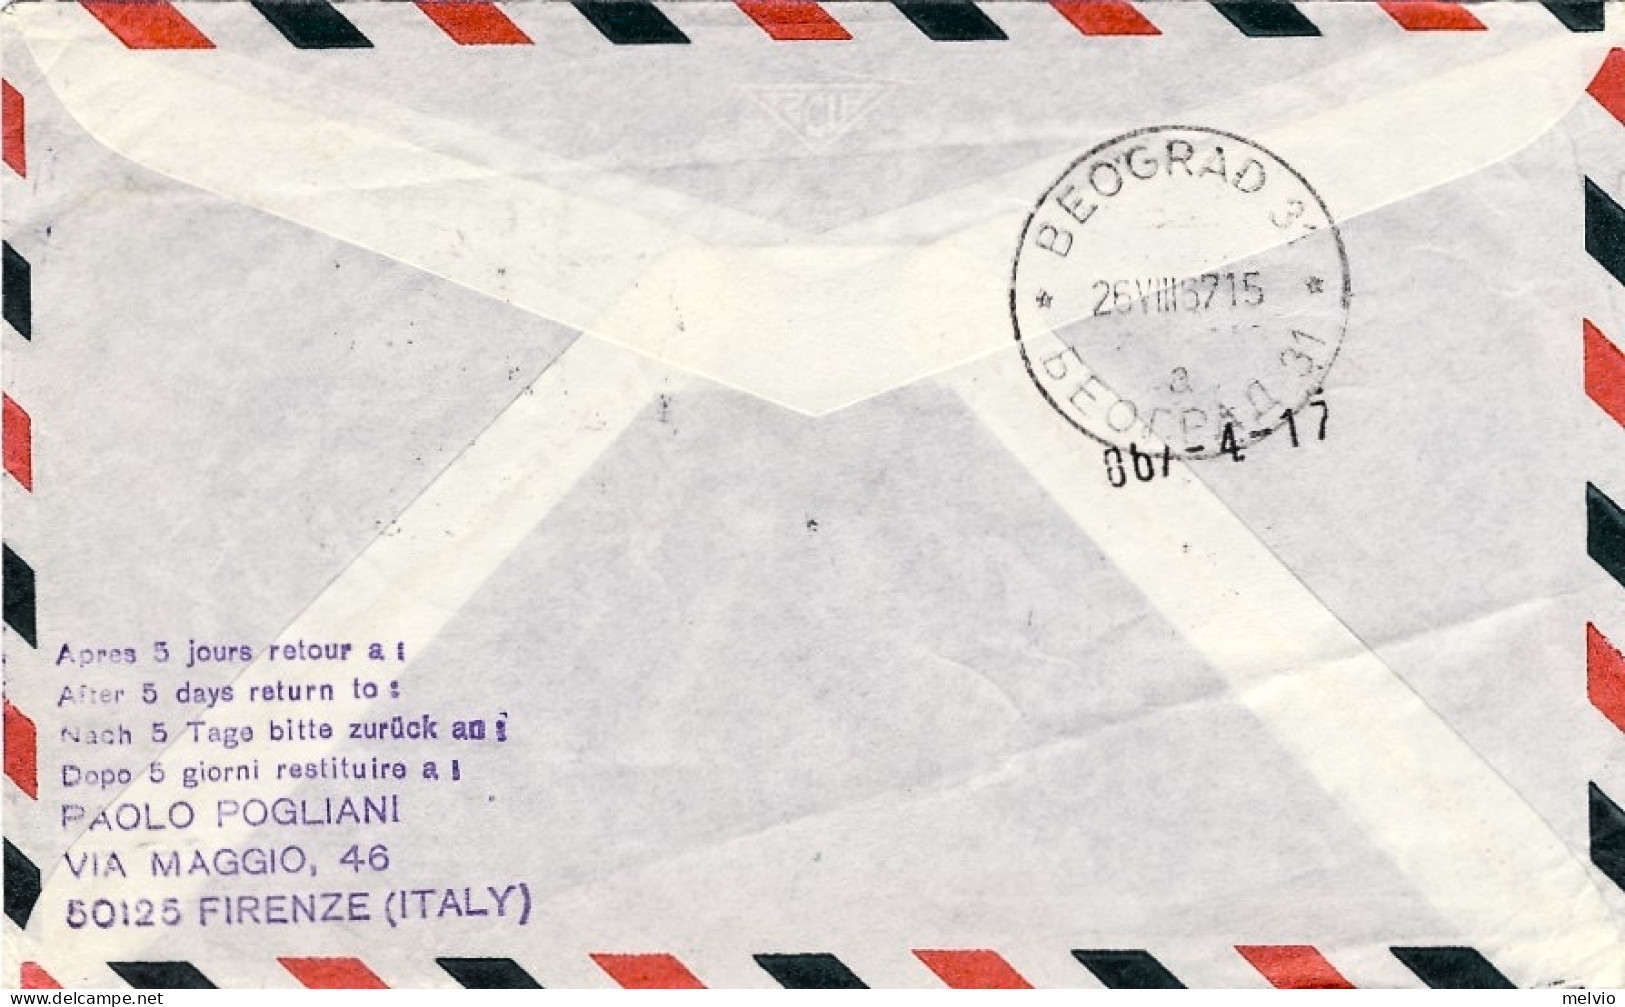 San Marino-1967 I^volo Lufthansa LH 194 Monaco-Belgrado - Airmail